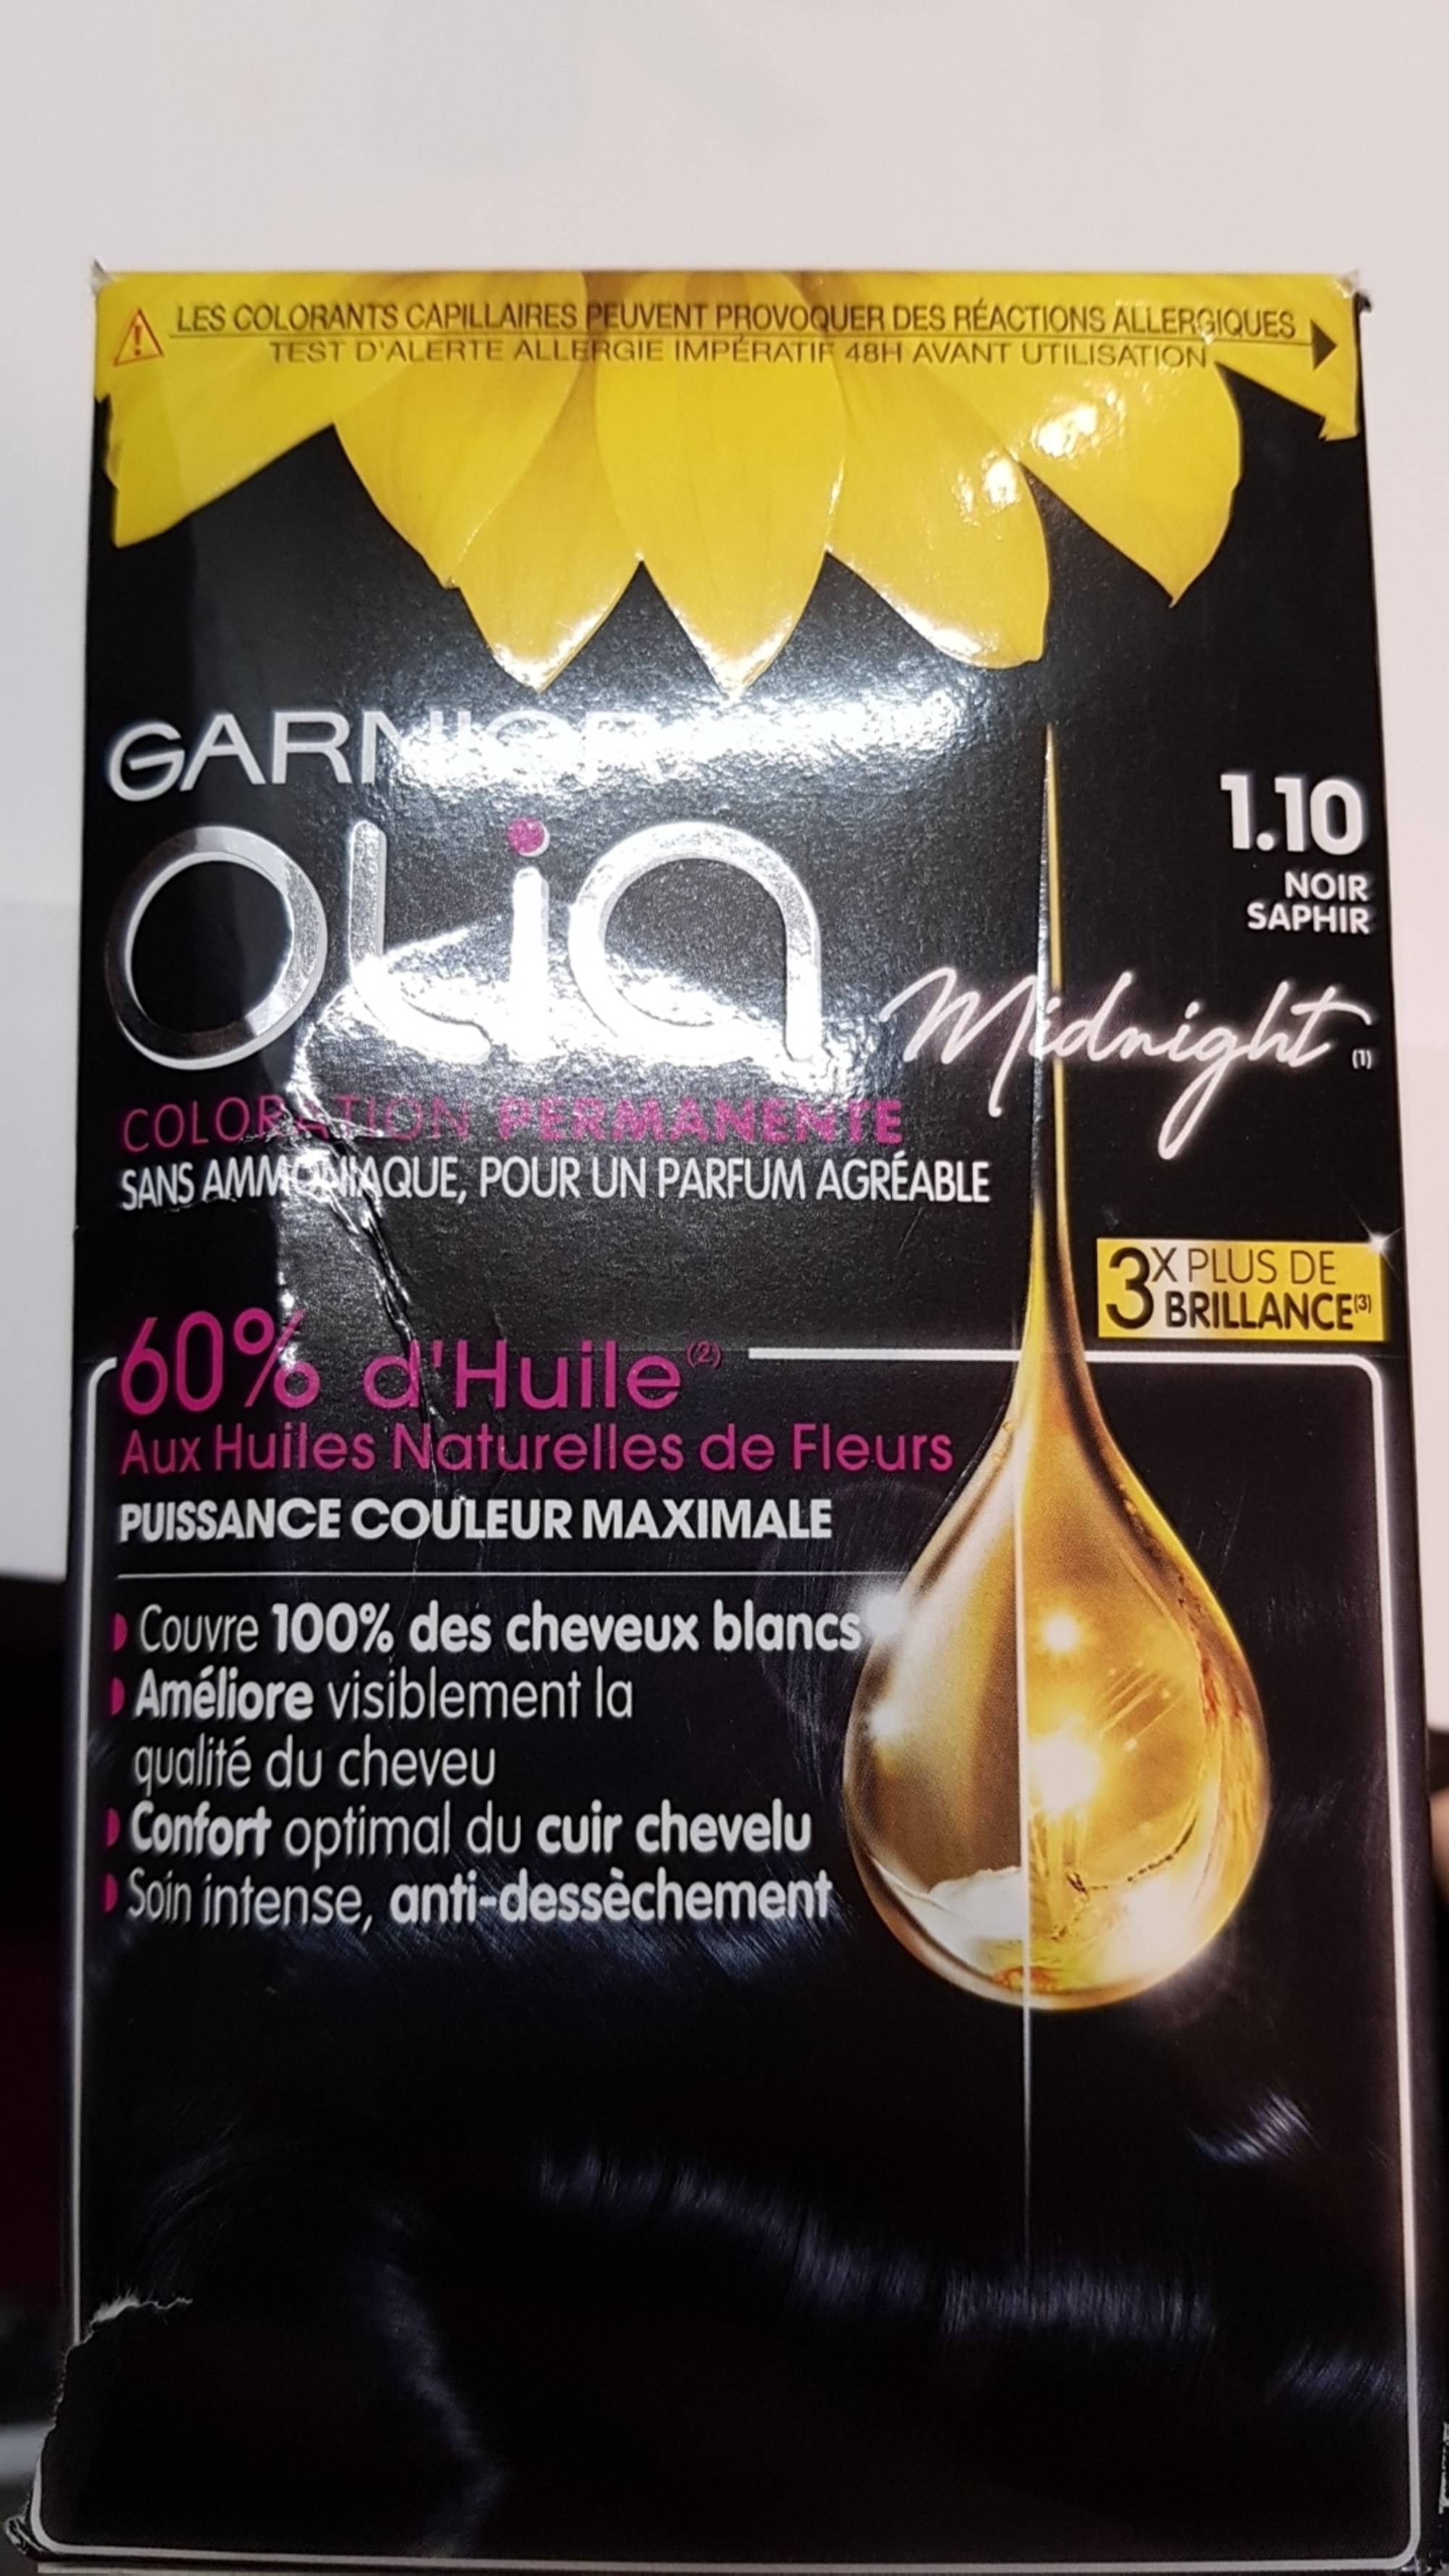 GARNIER - Olia midnight - Coloration permanente 1.10 noir saphir